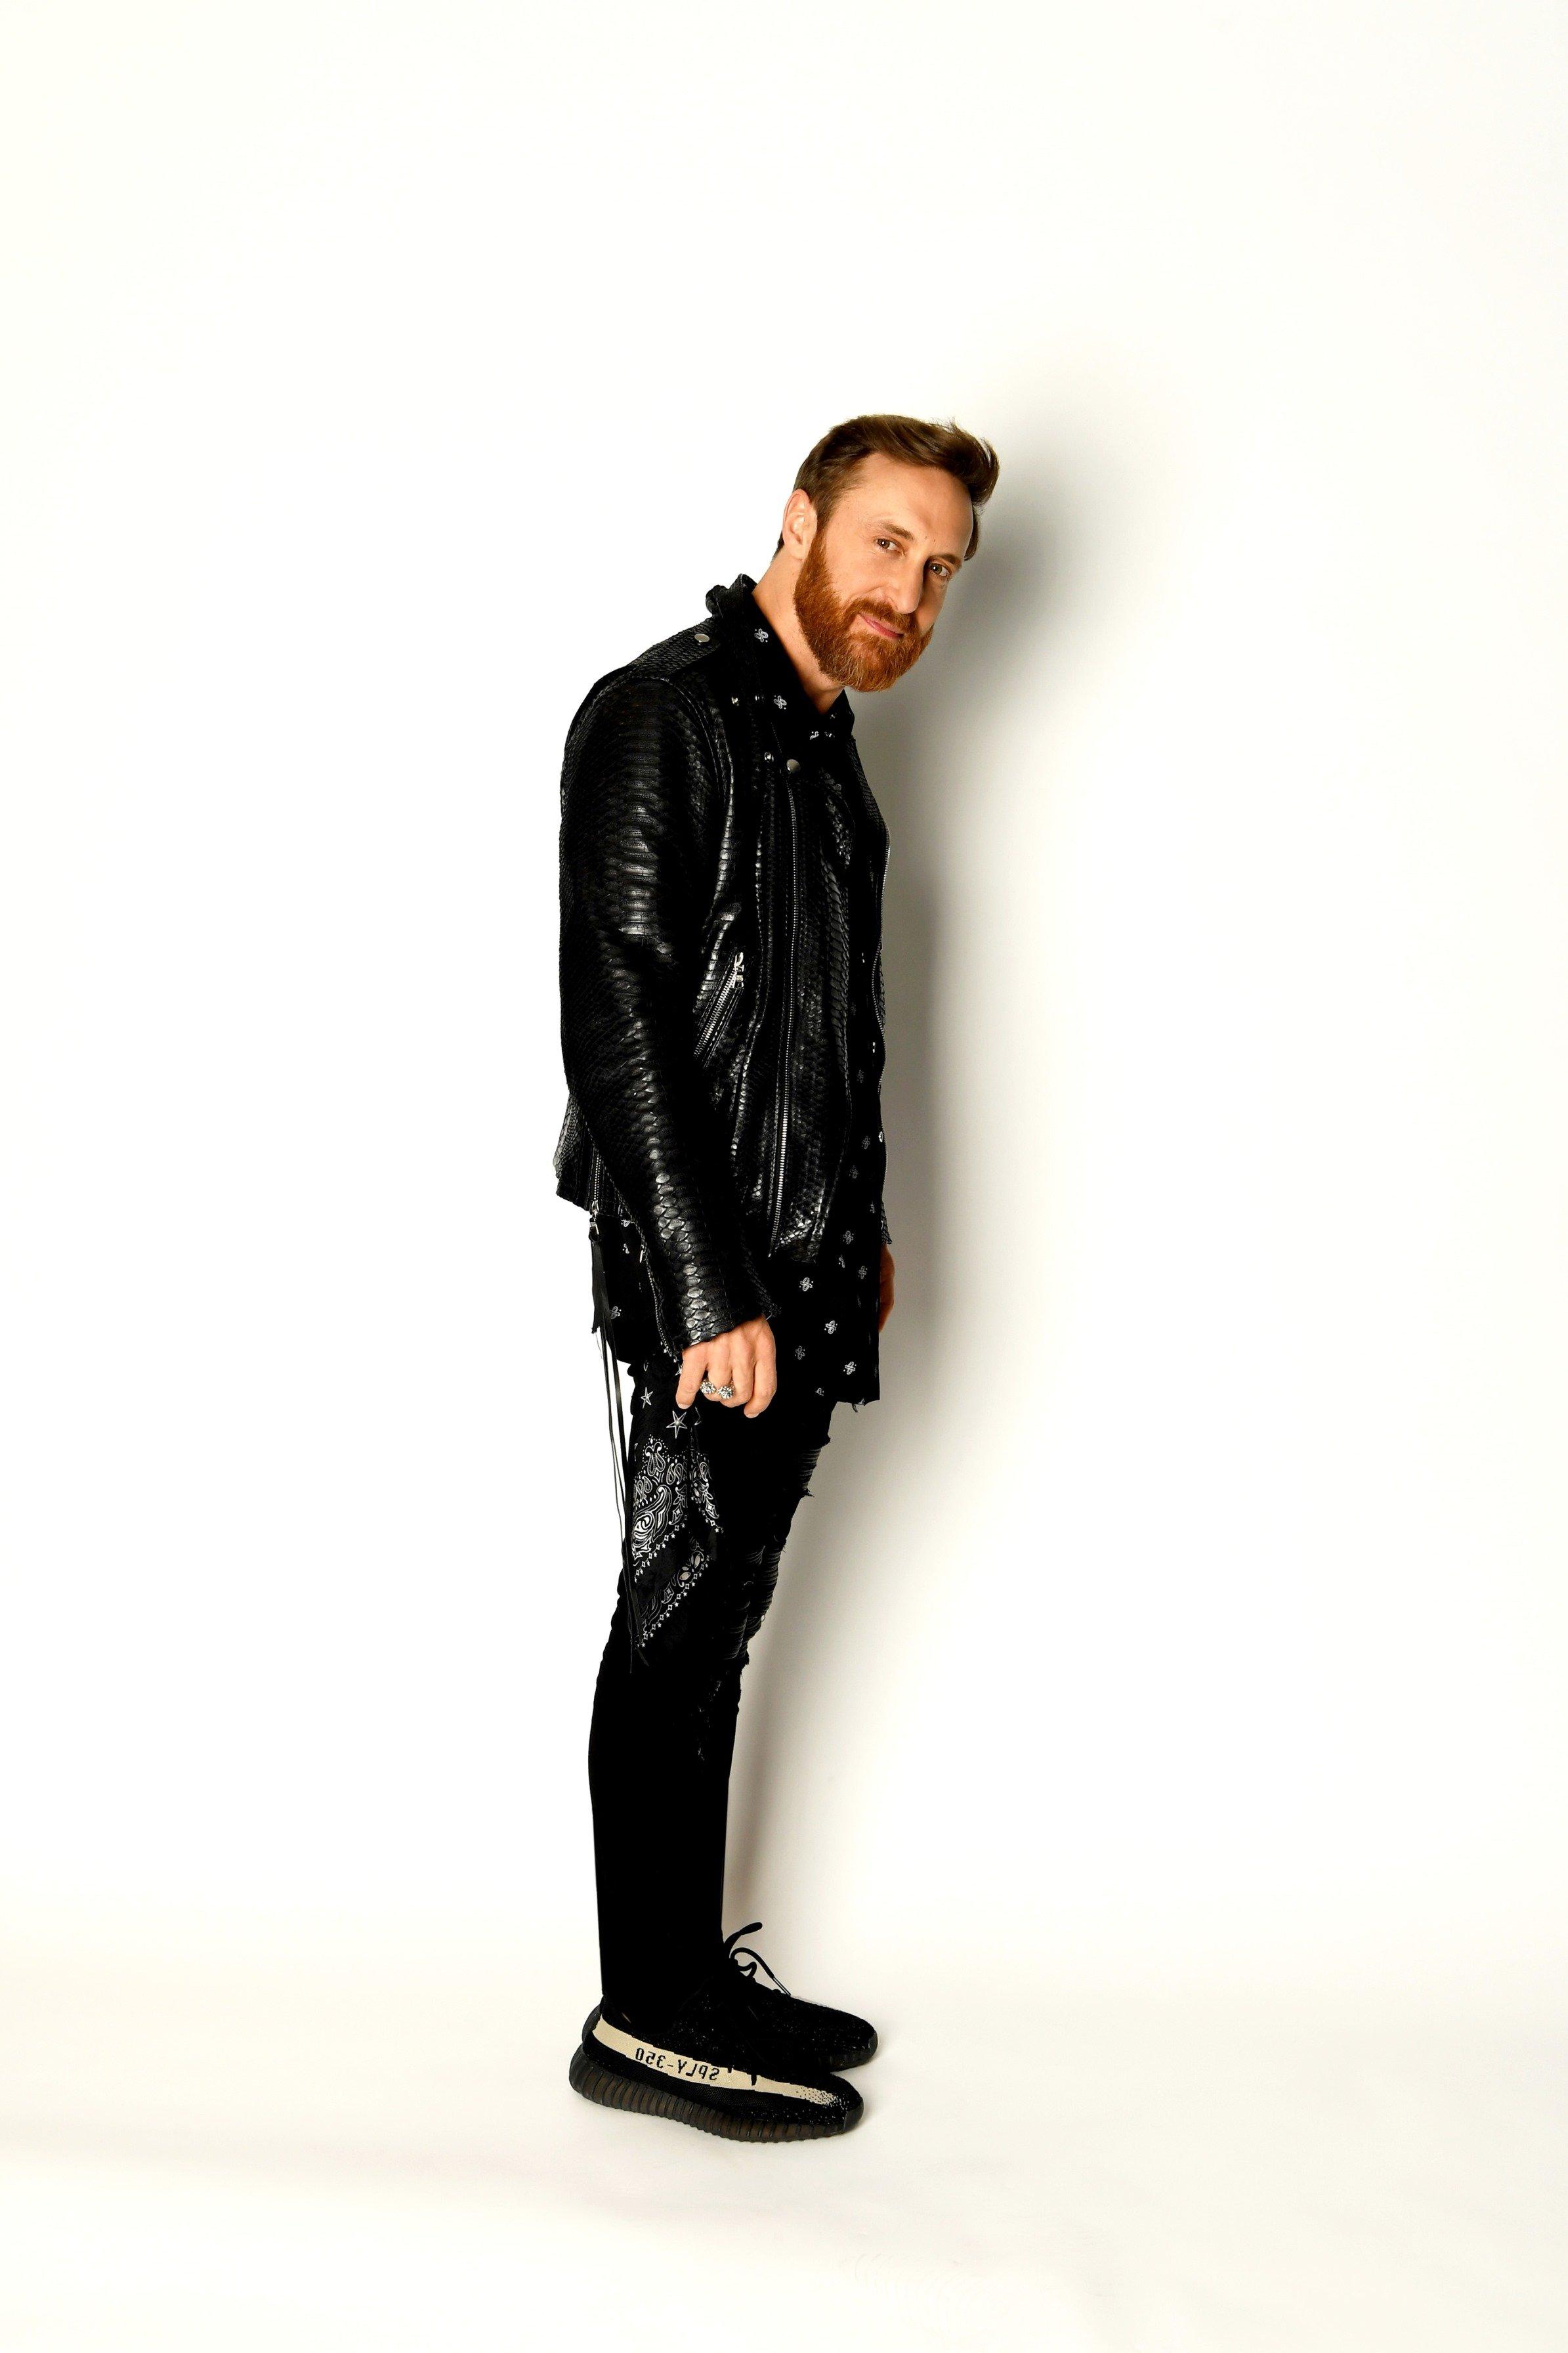 David Guetta To Skrillex: Who Are The Highest Paid DJs?   GRAMMY.com